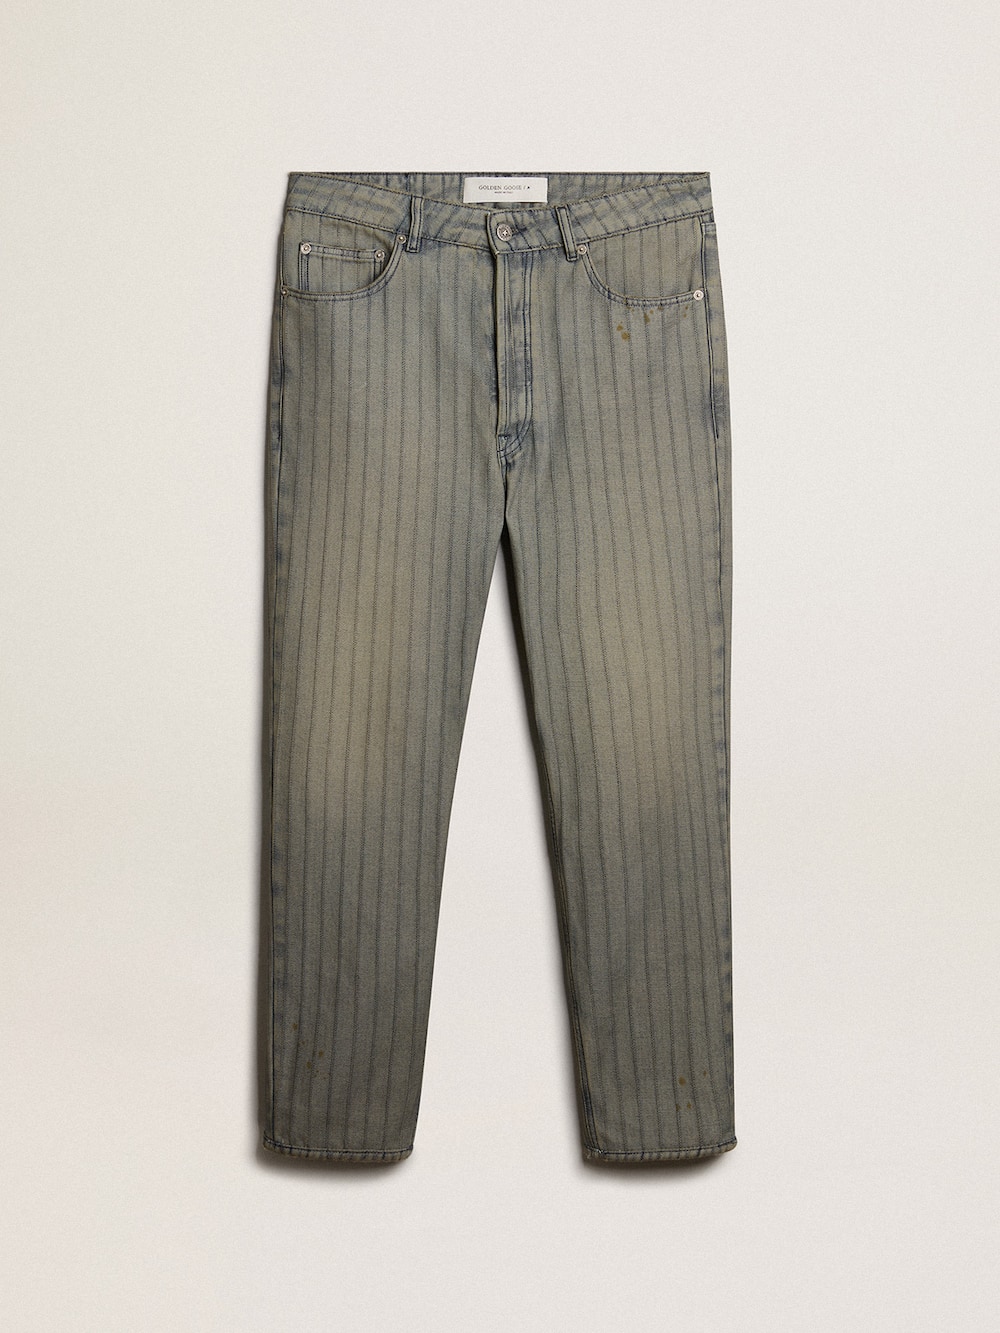 Golden Goose - Men's gray pants in striped denim in 